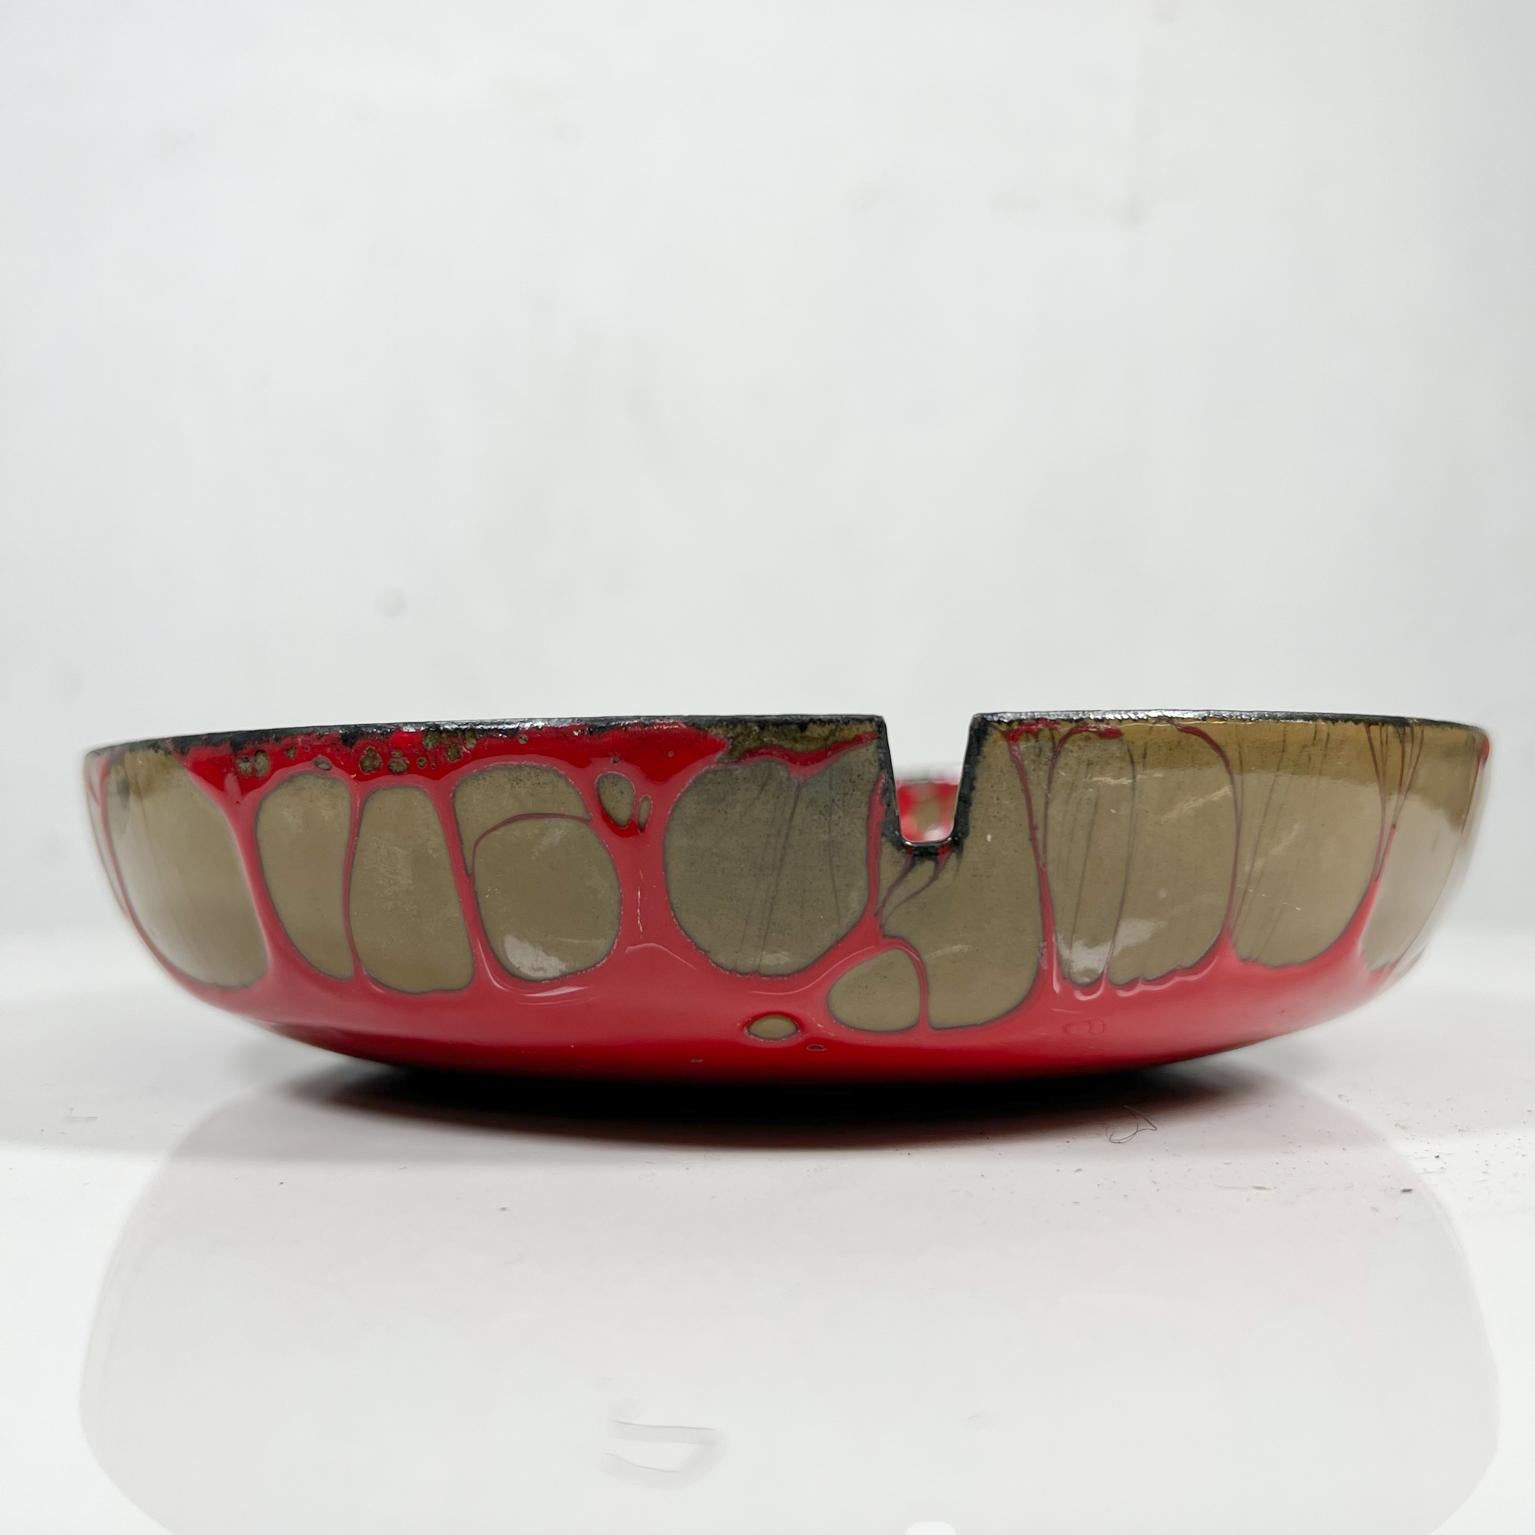 1960s Hanova of Pasadena enamel art on steel splashy red gold ashtray California.
Measures: 7.5 diameter x 1.63
Enamel bowl catchall ashtray by Hanova in red gold tones.
Unrestored vintage condition
See images please.
 